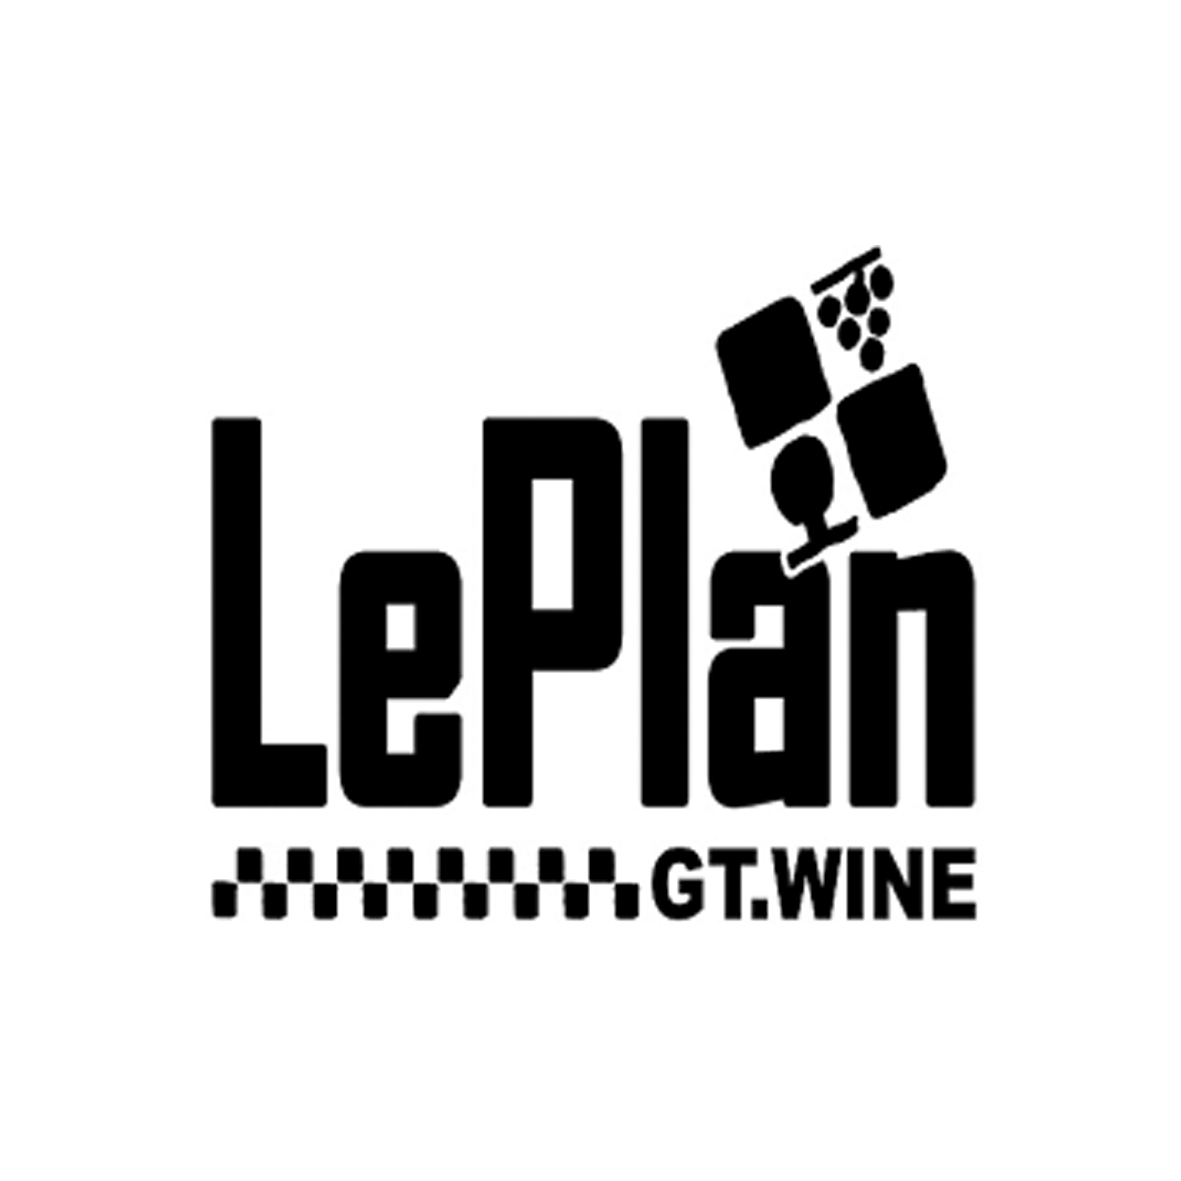 LePlan GT